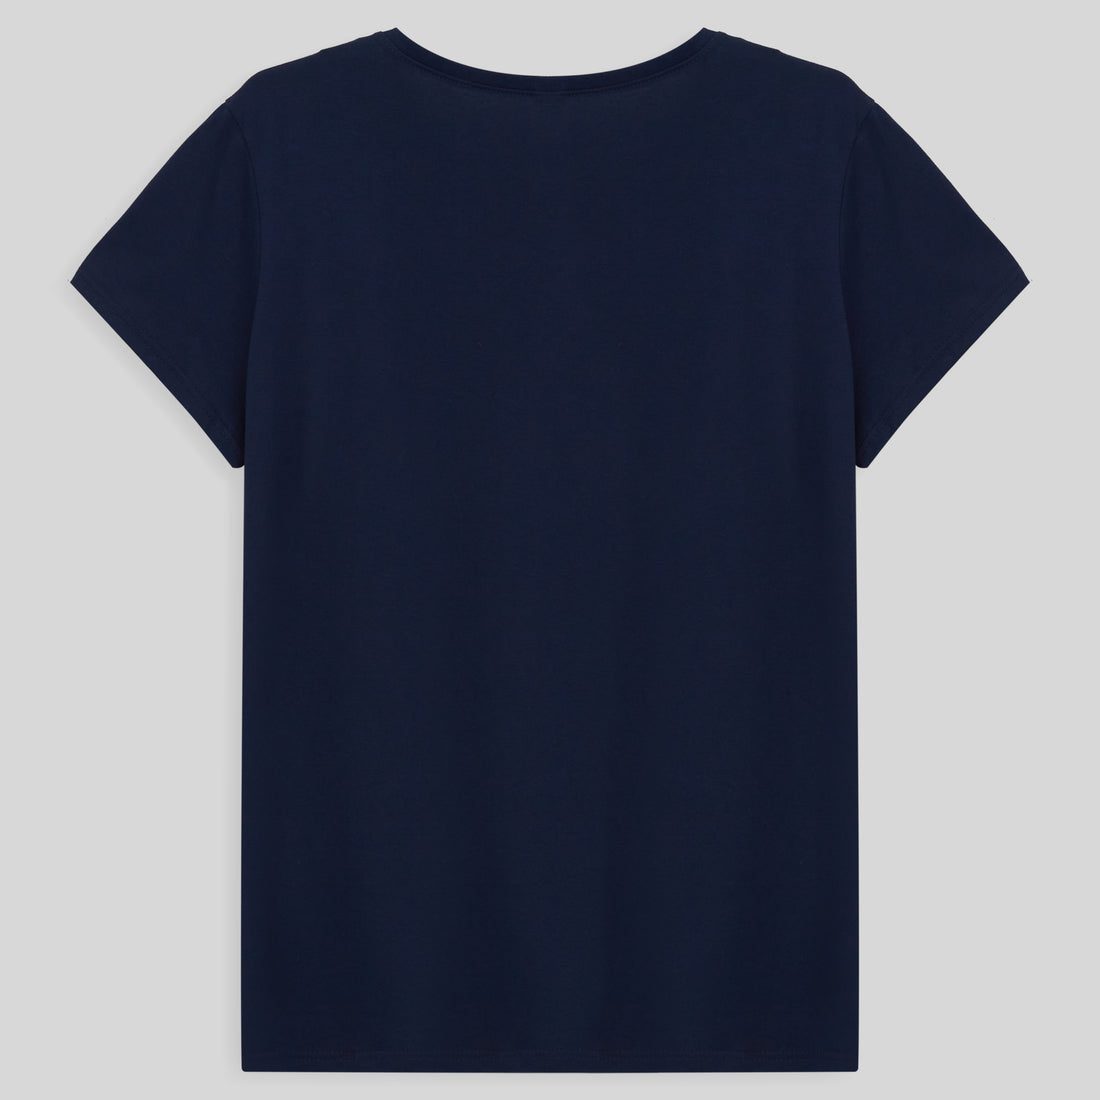 Camiseta Babylook Algodão Premium Plus Feminina - Azul Marinho